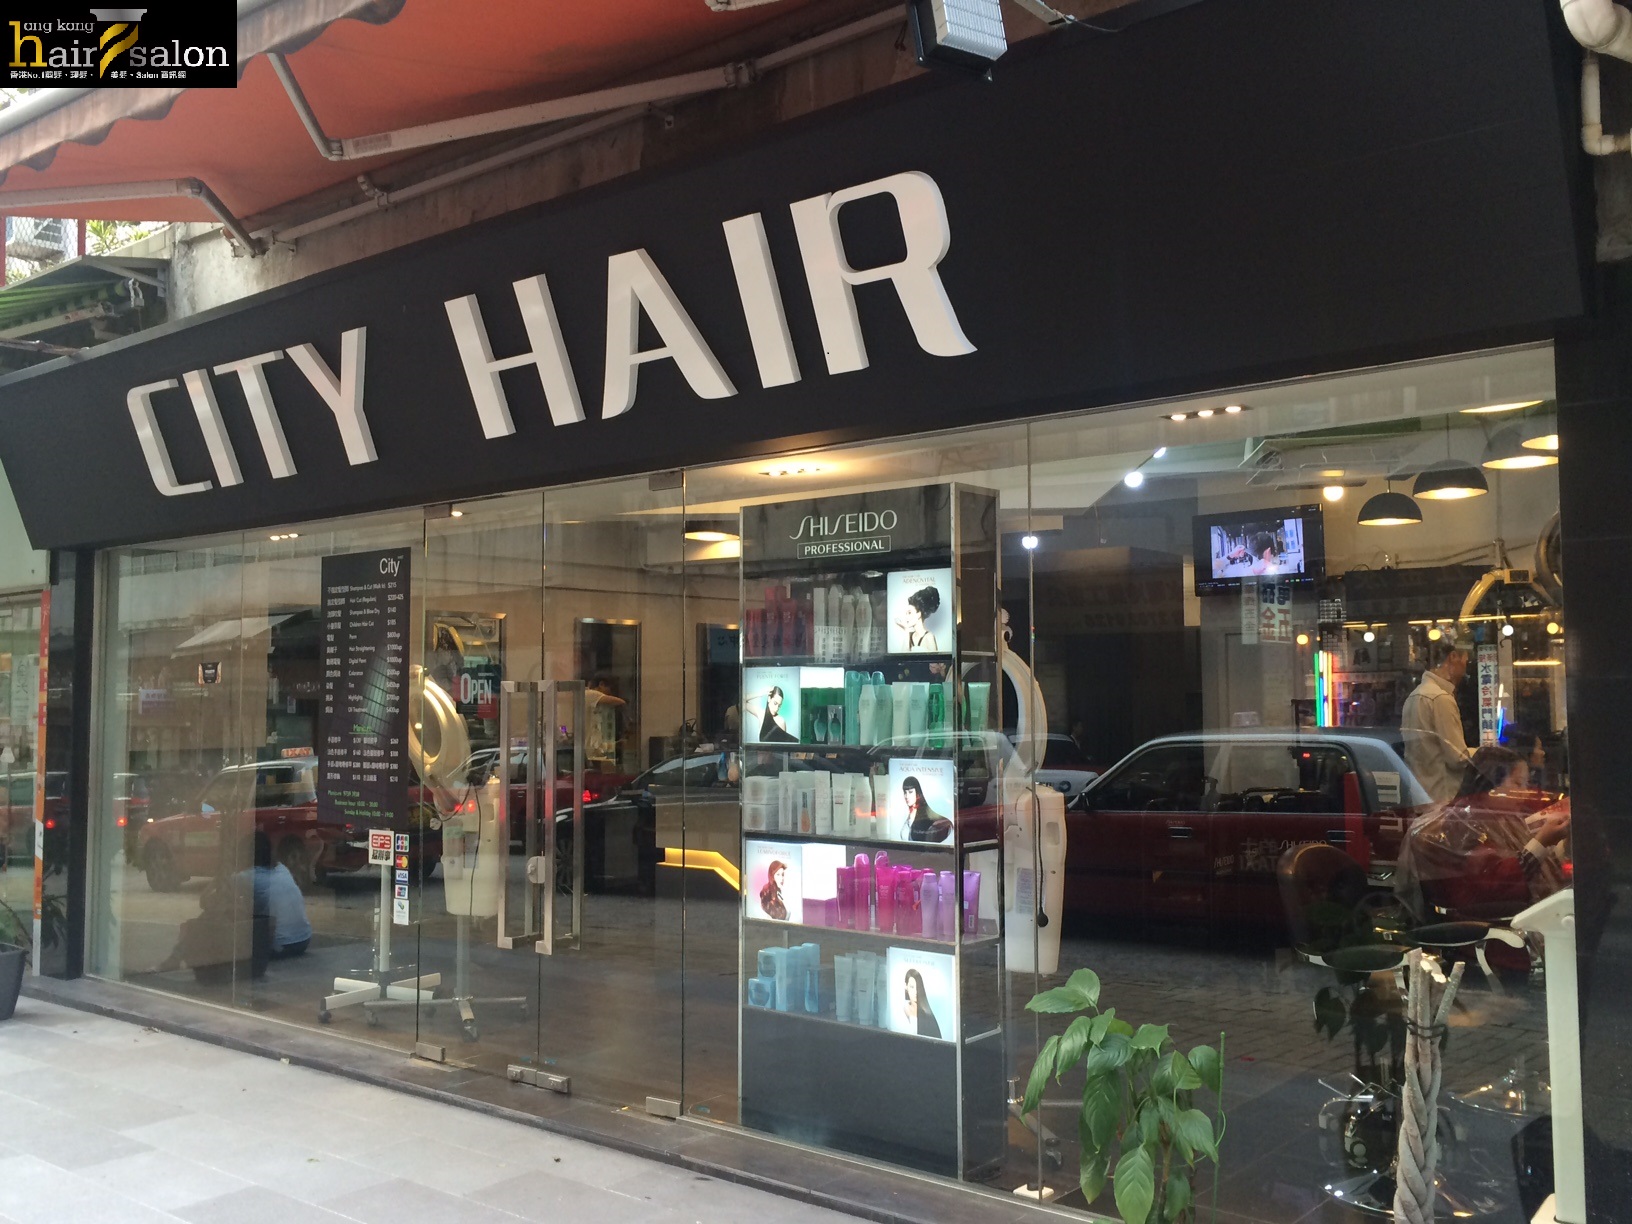 Electric hair: City HAIR